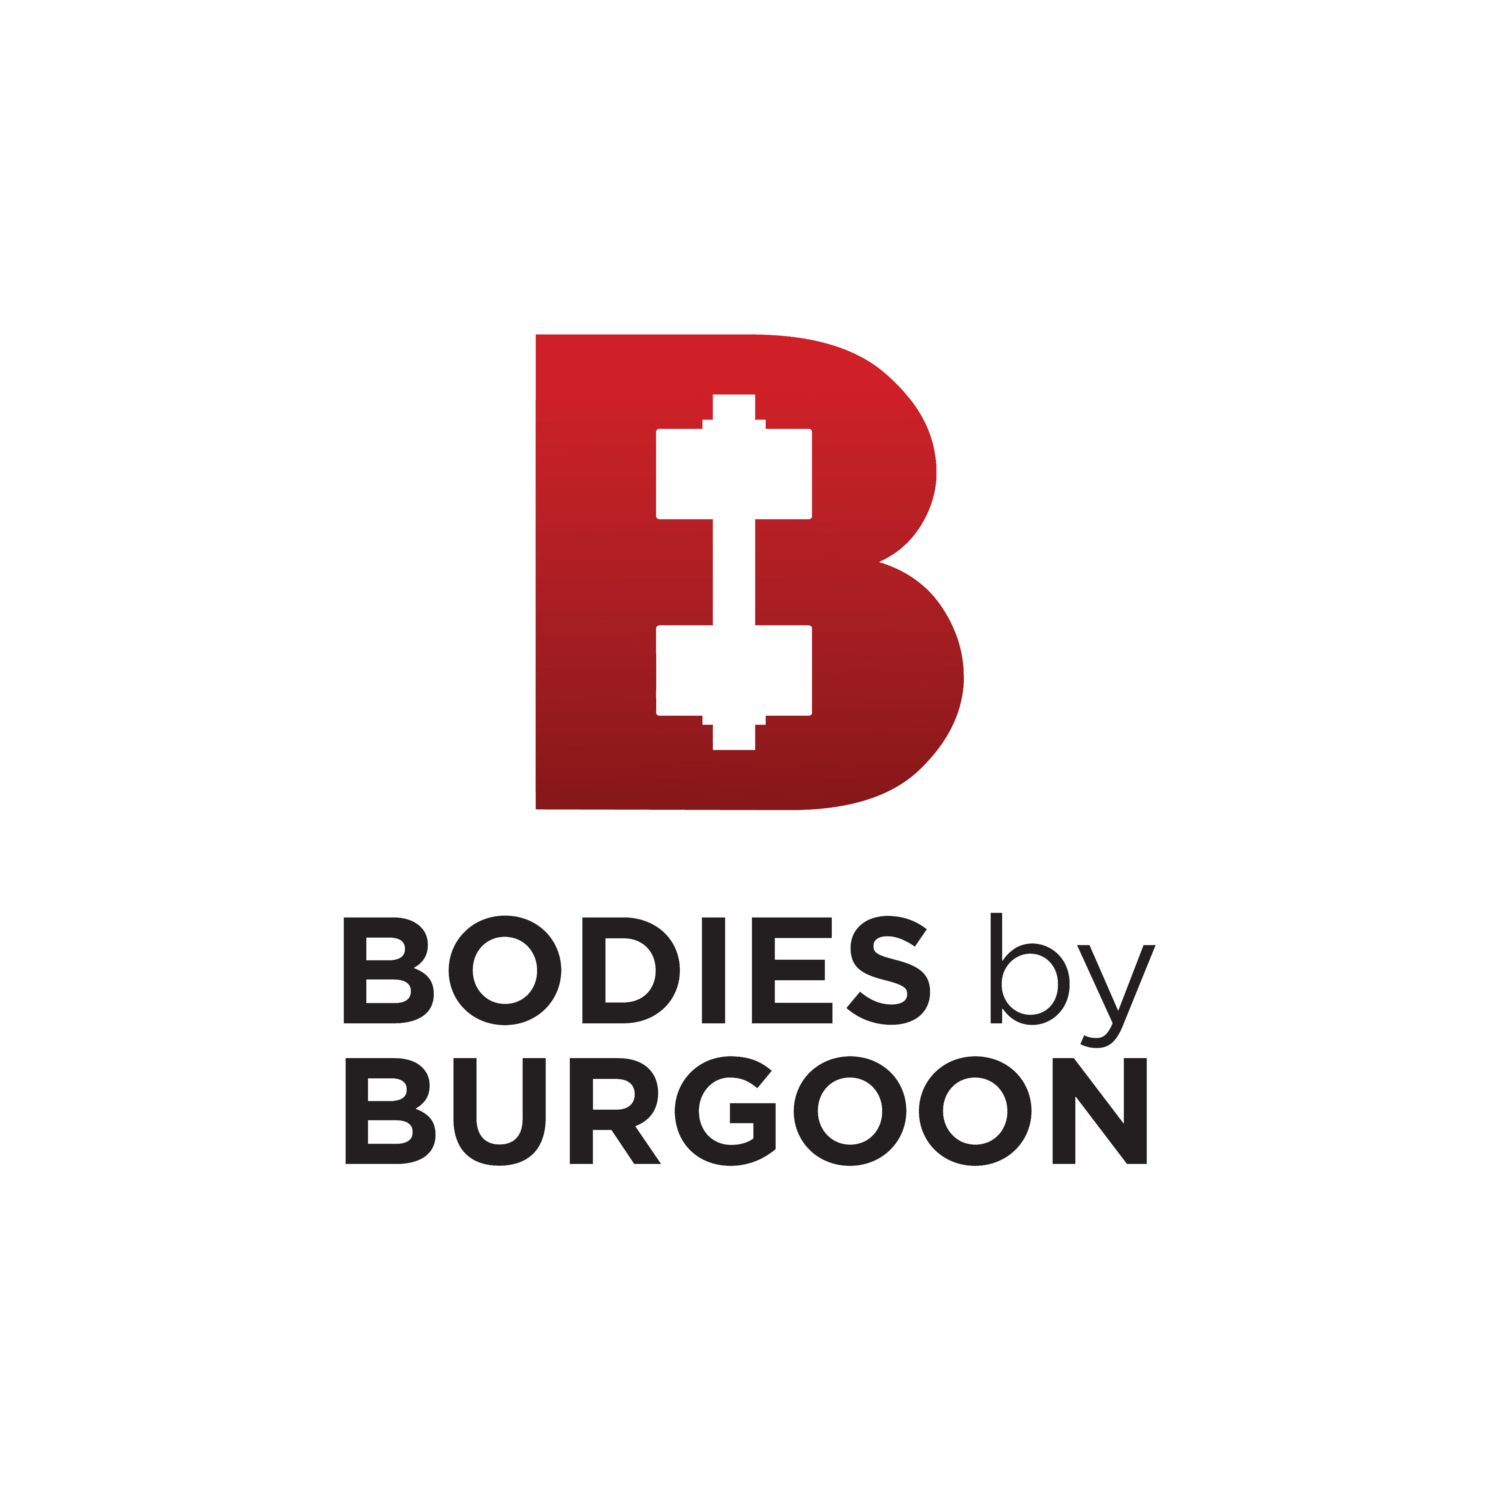 Bodies by Burgoon